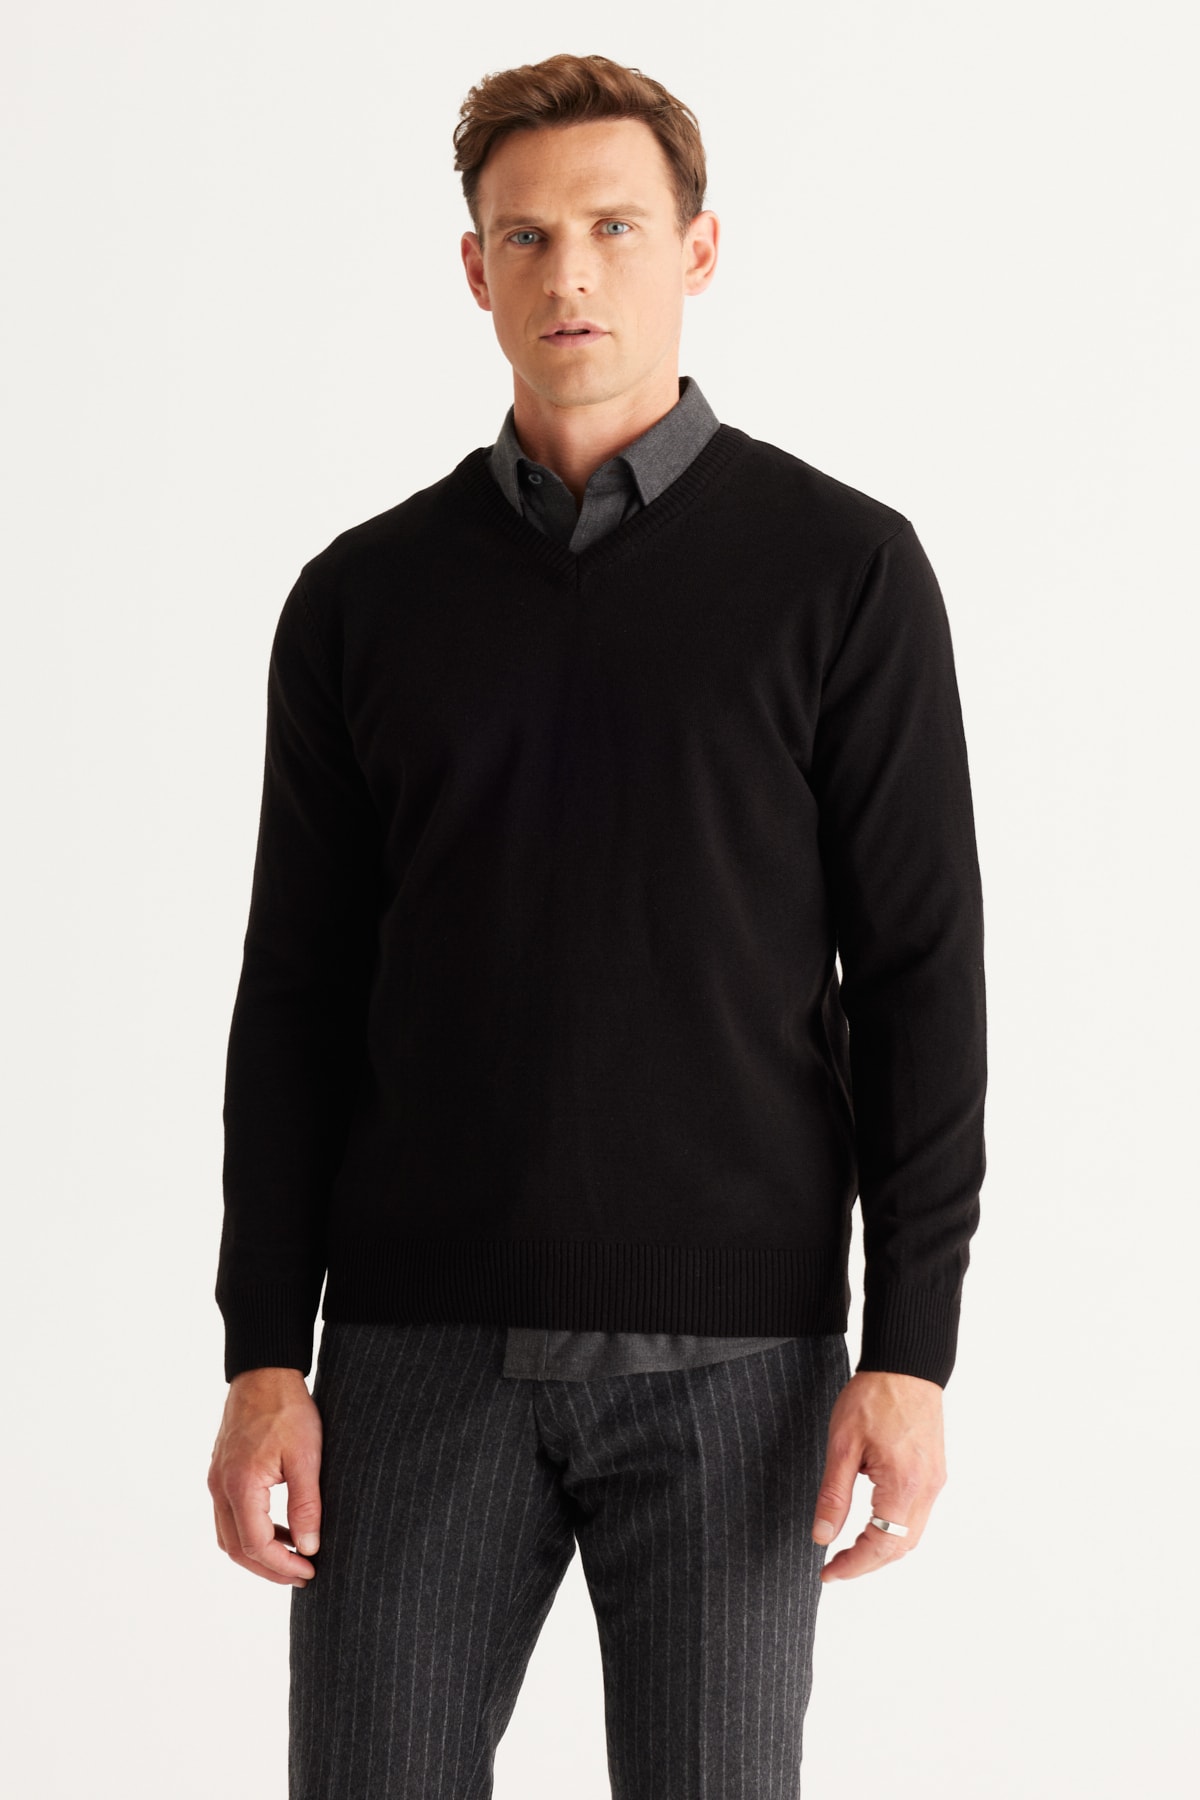 Levně ALTINYILDIZ CLASSICS Men's Black Standard Fit Normal Cut V-Neck Knitwear Sweater.